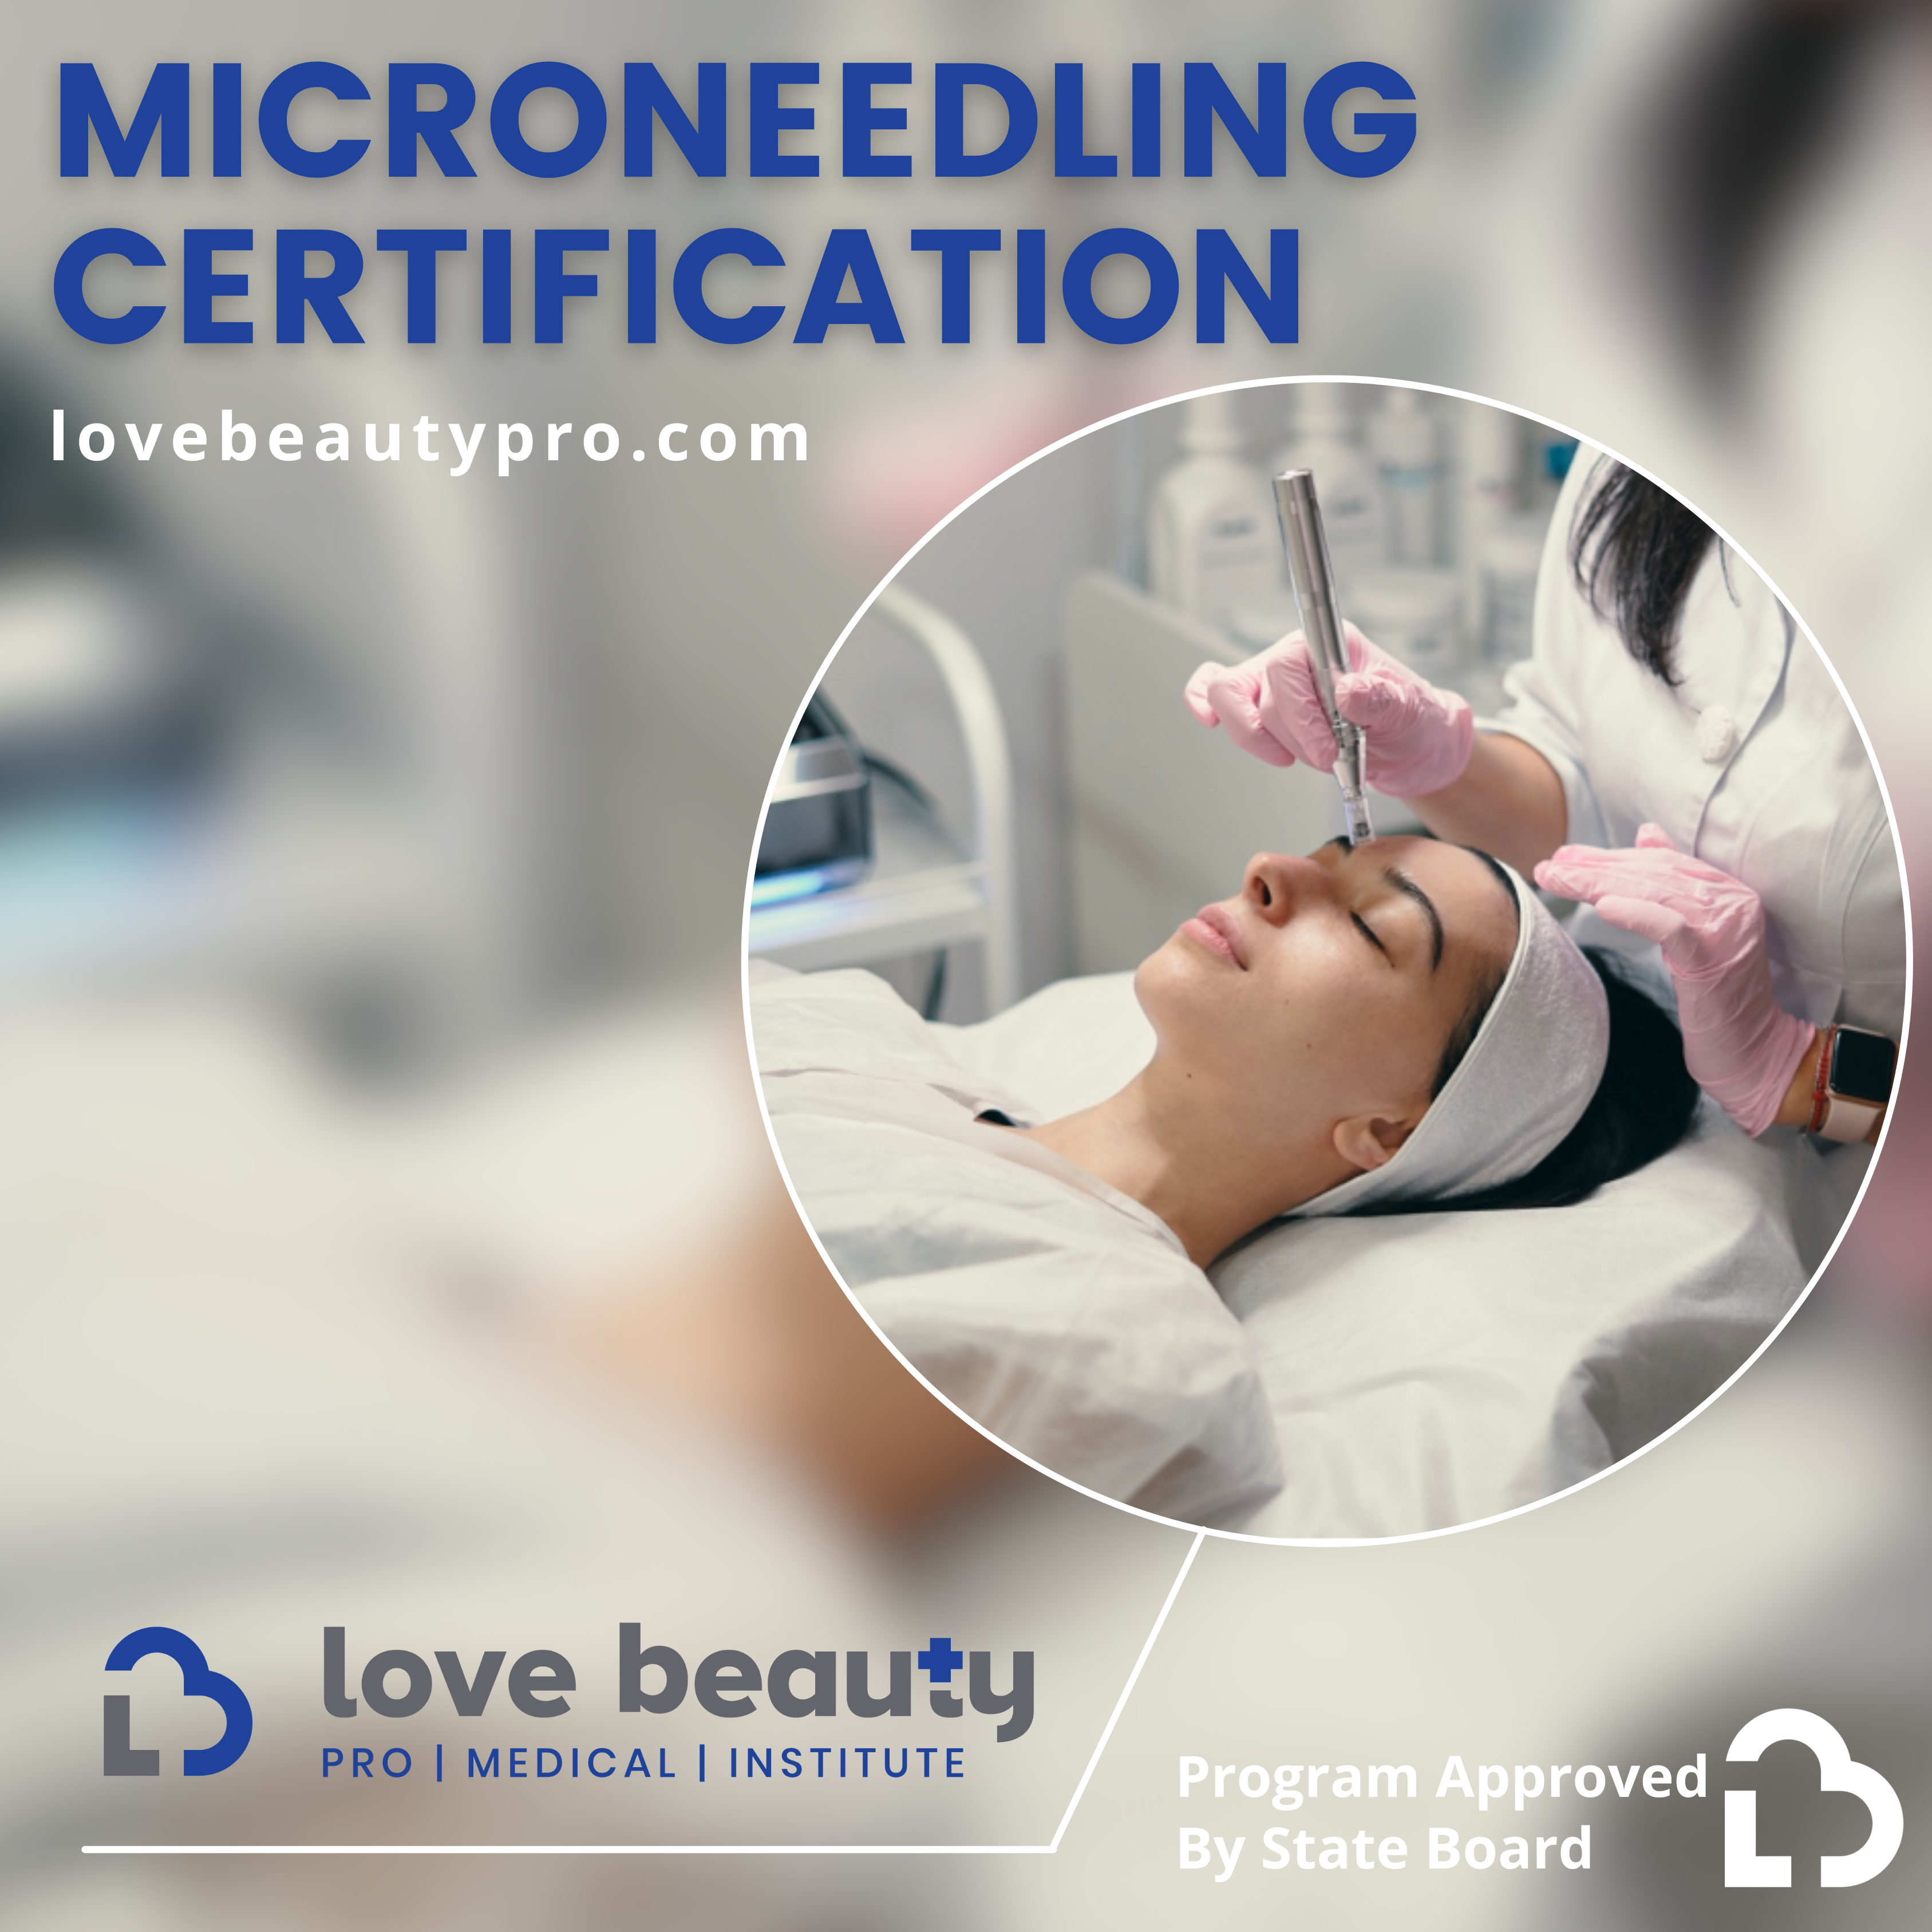 MICRONEEDLING Certification - lovebeautypro.com